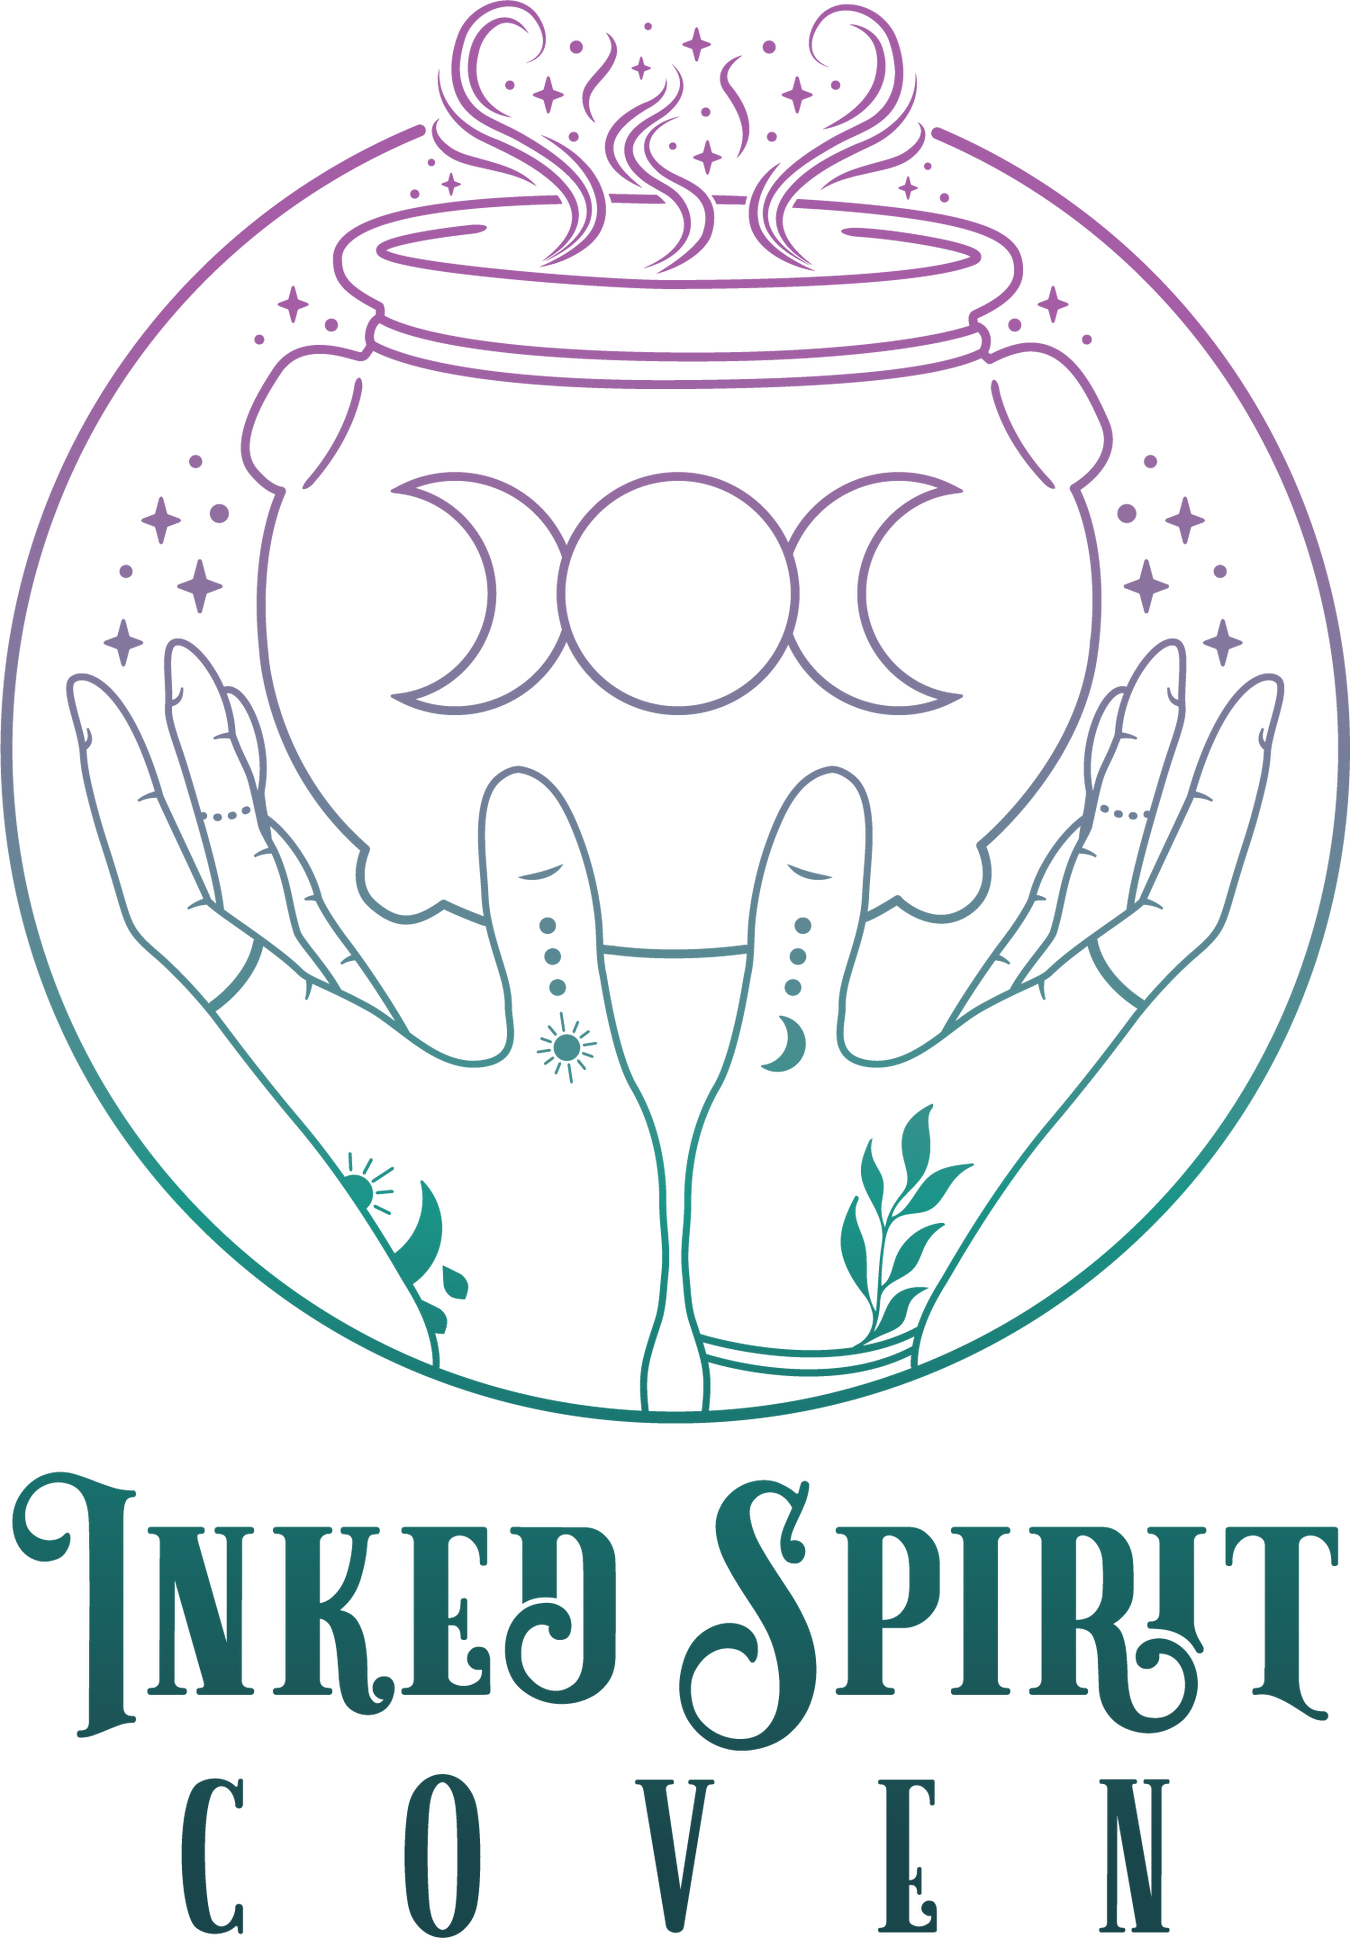 Inked Spirit Coven